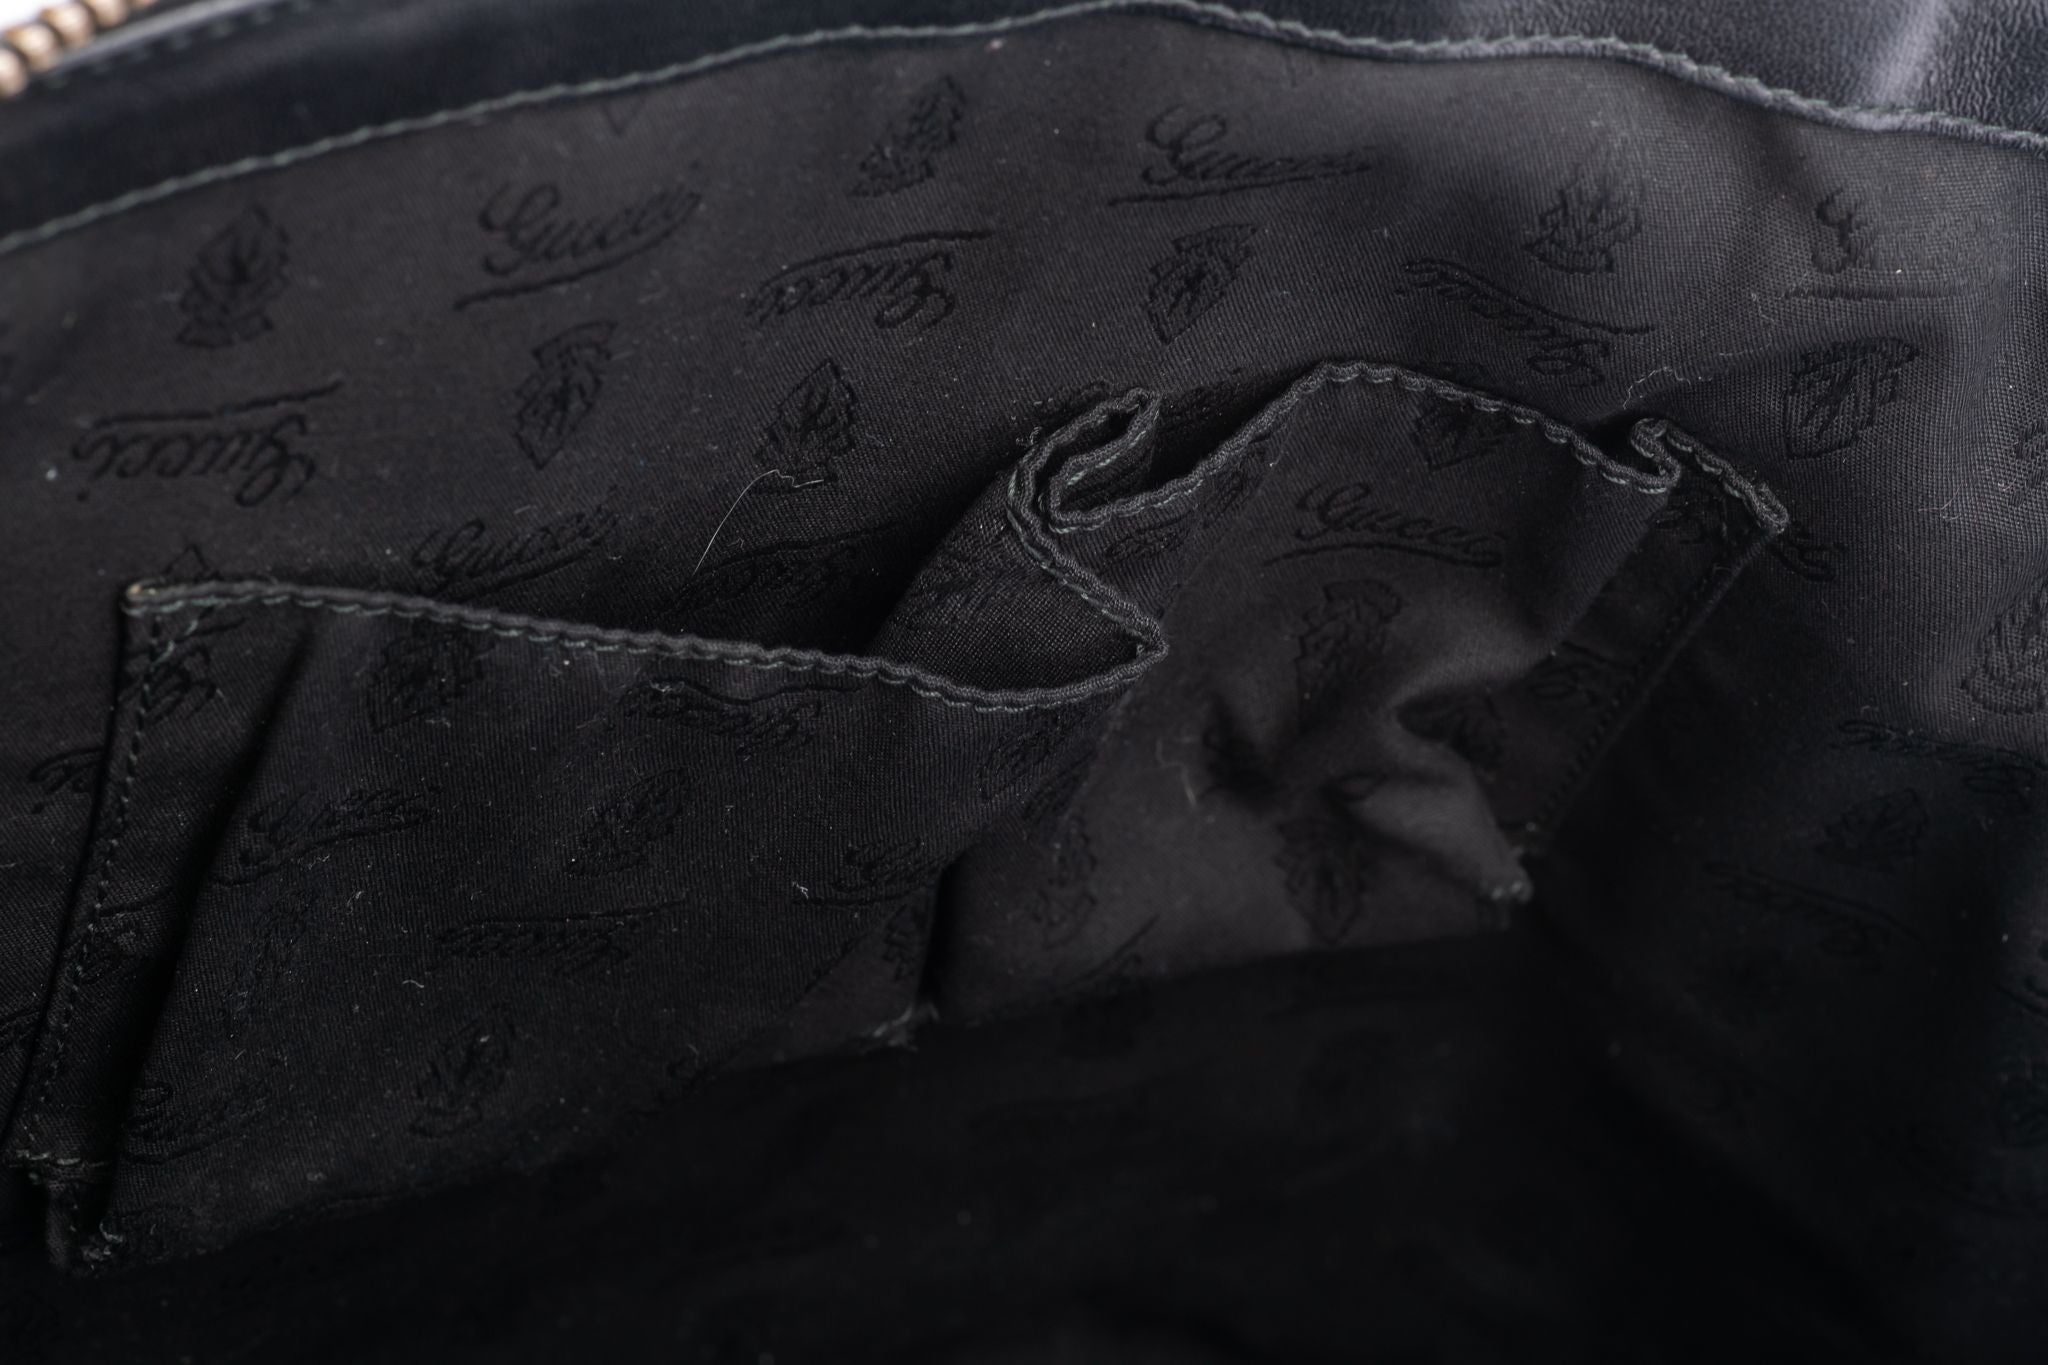 Gucci Black Monogram Suede Shoulder Bag